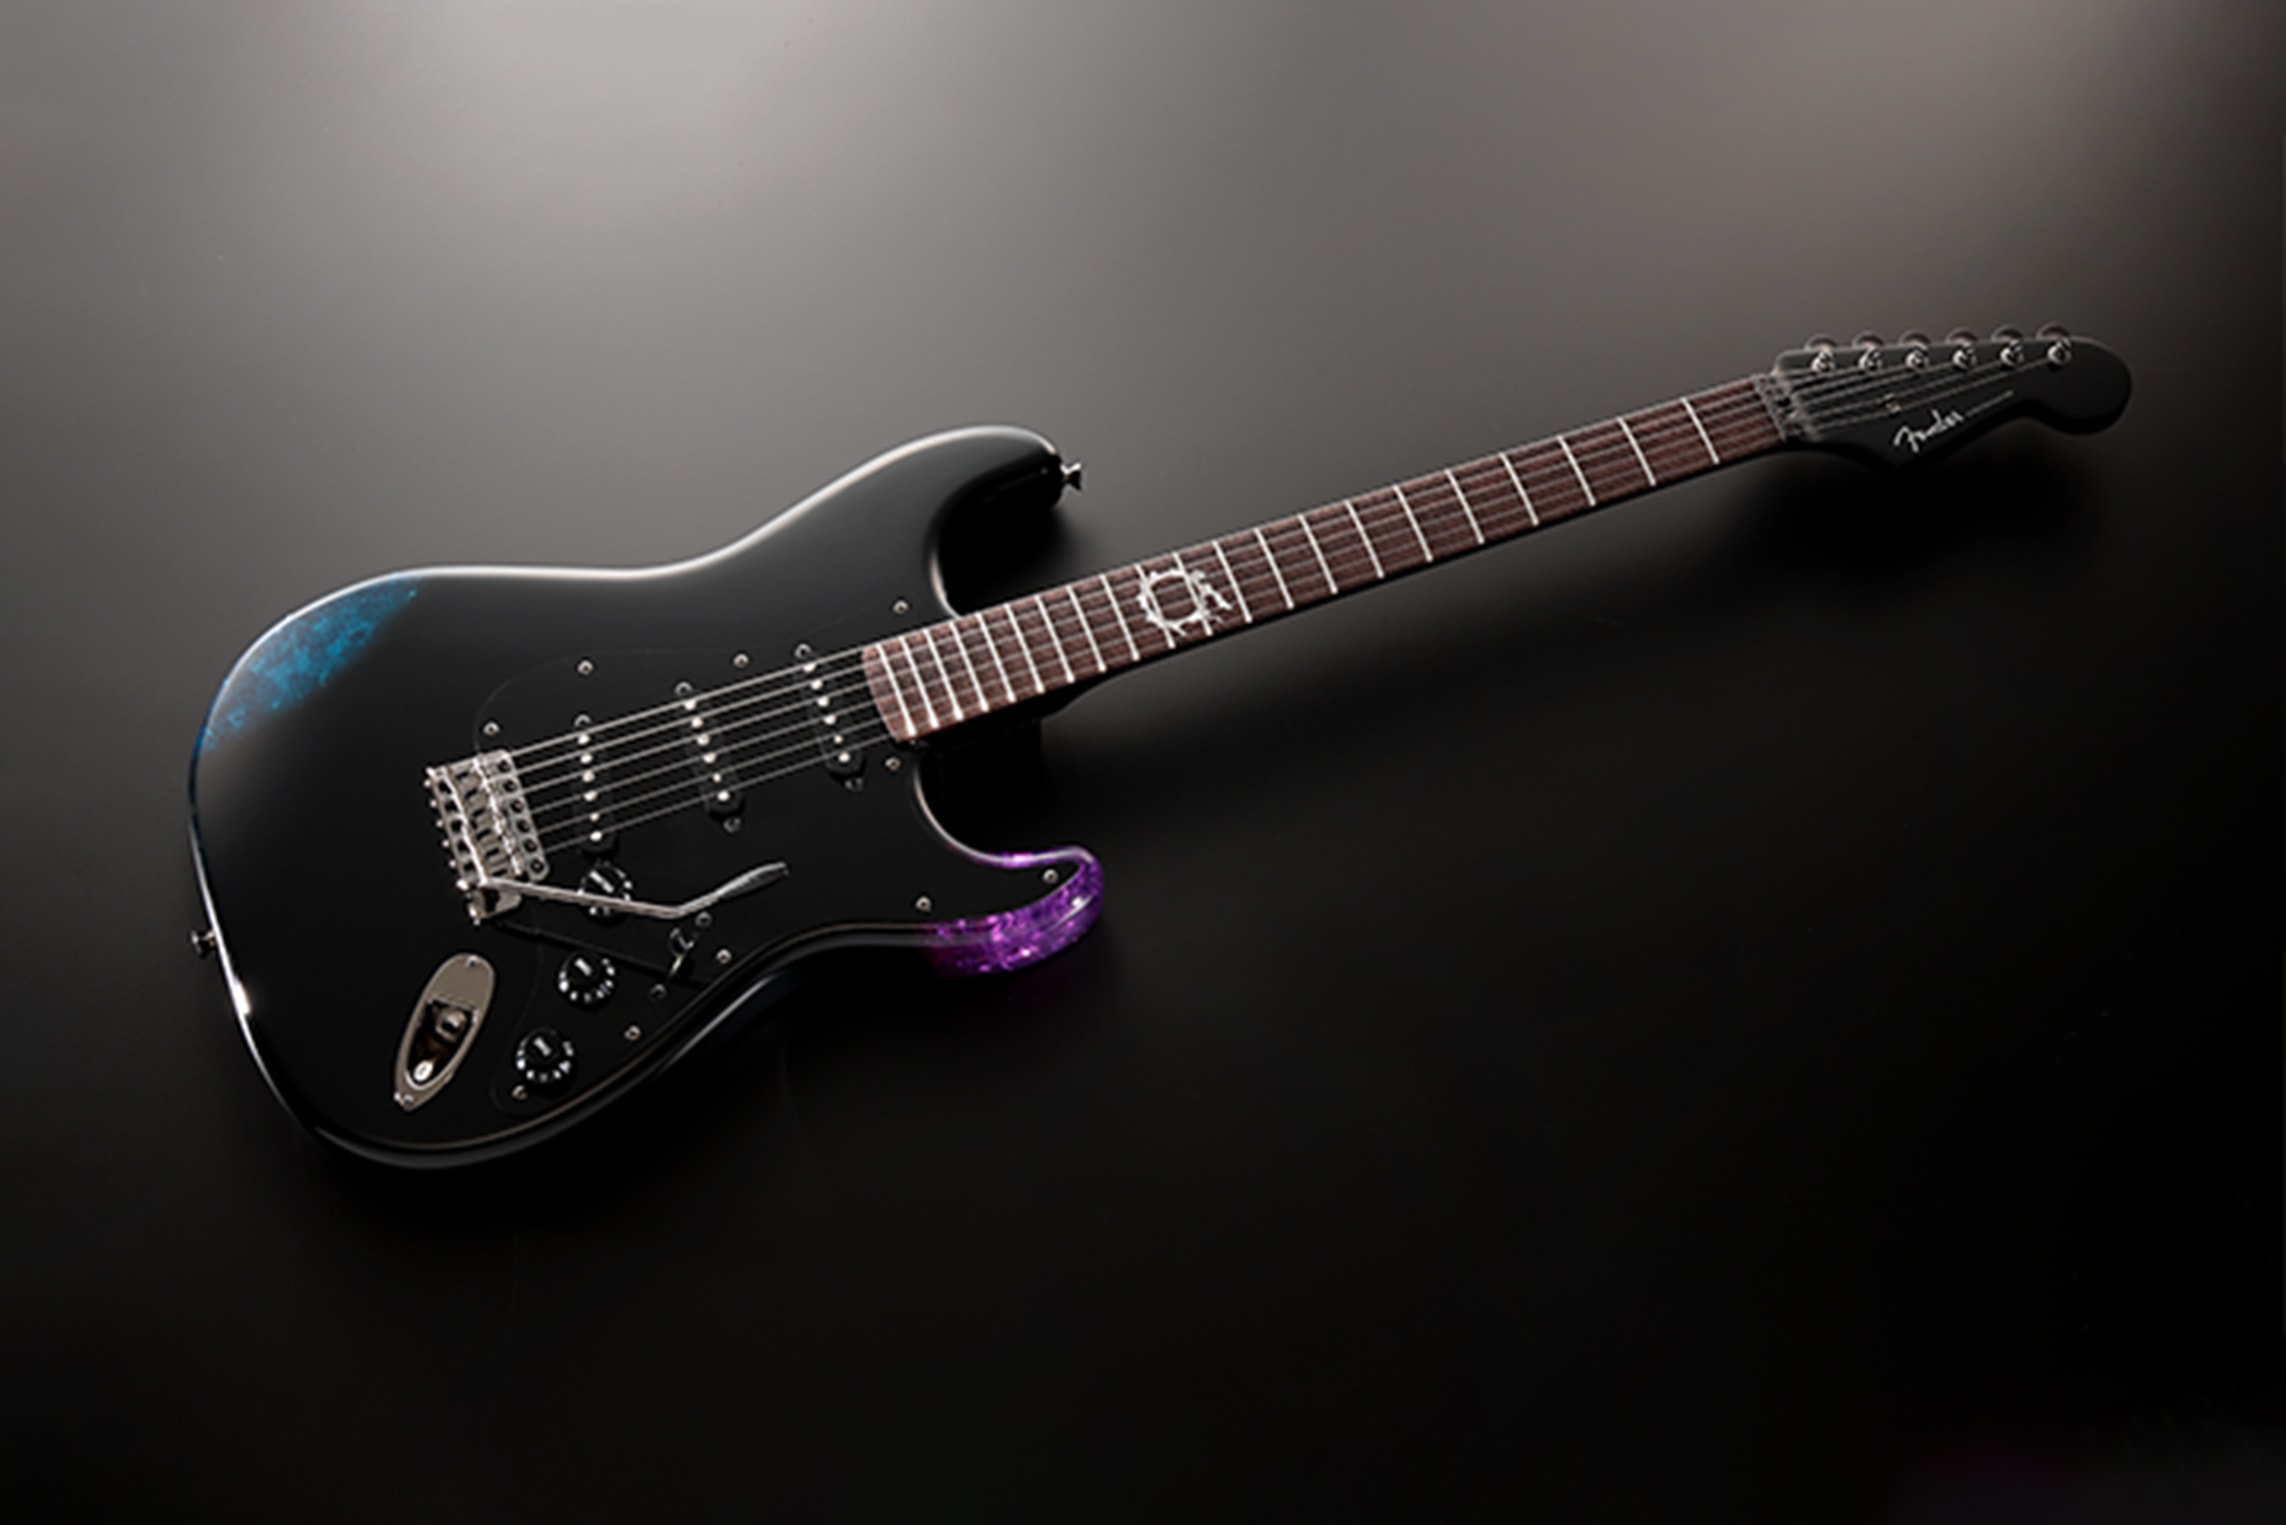 Fender FINAL FANTASY XIV Stratocaster guitar release gaming Japan Bard Mode Gaming Fender Stratocaster